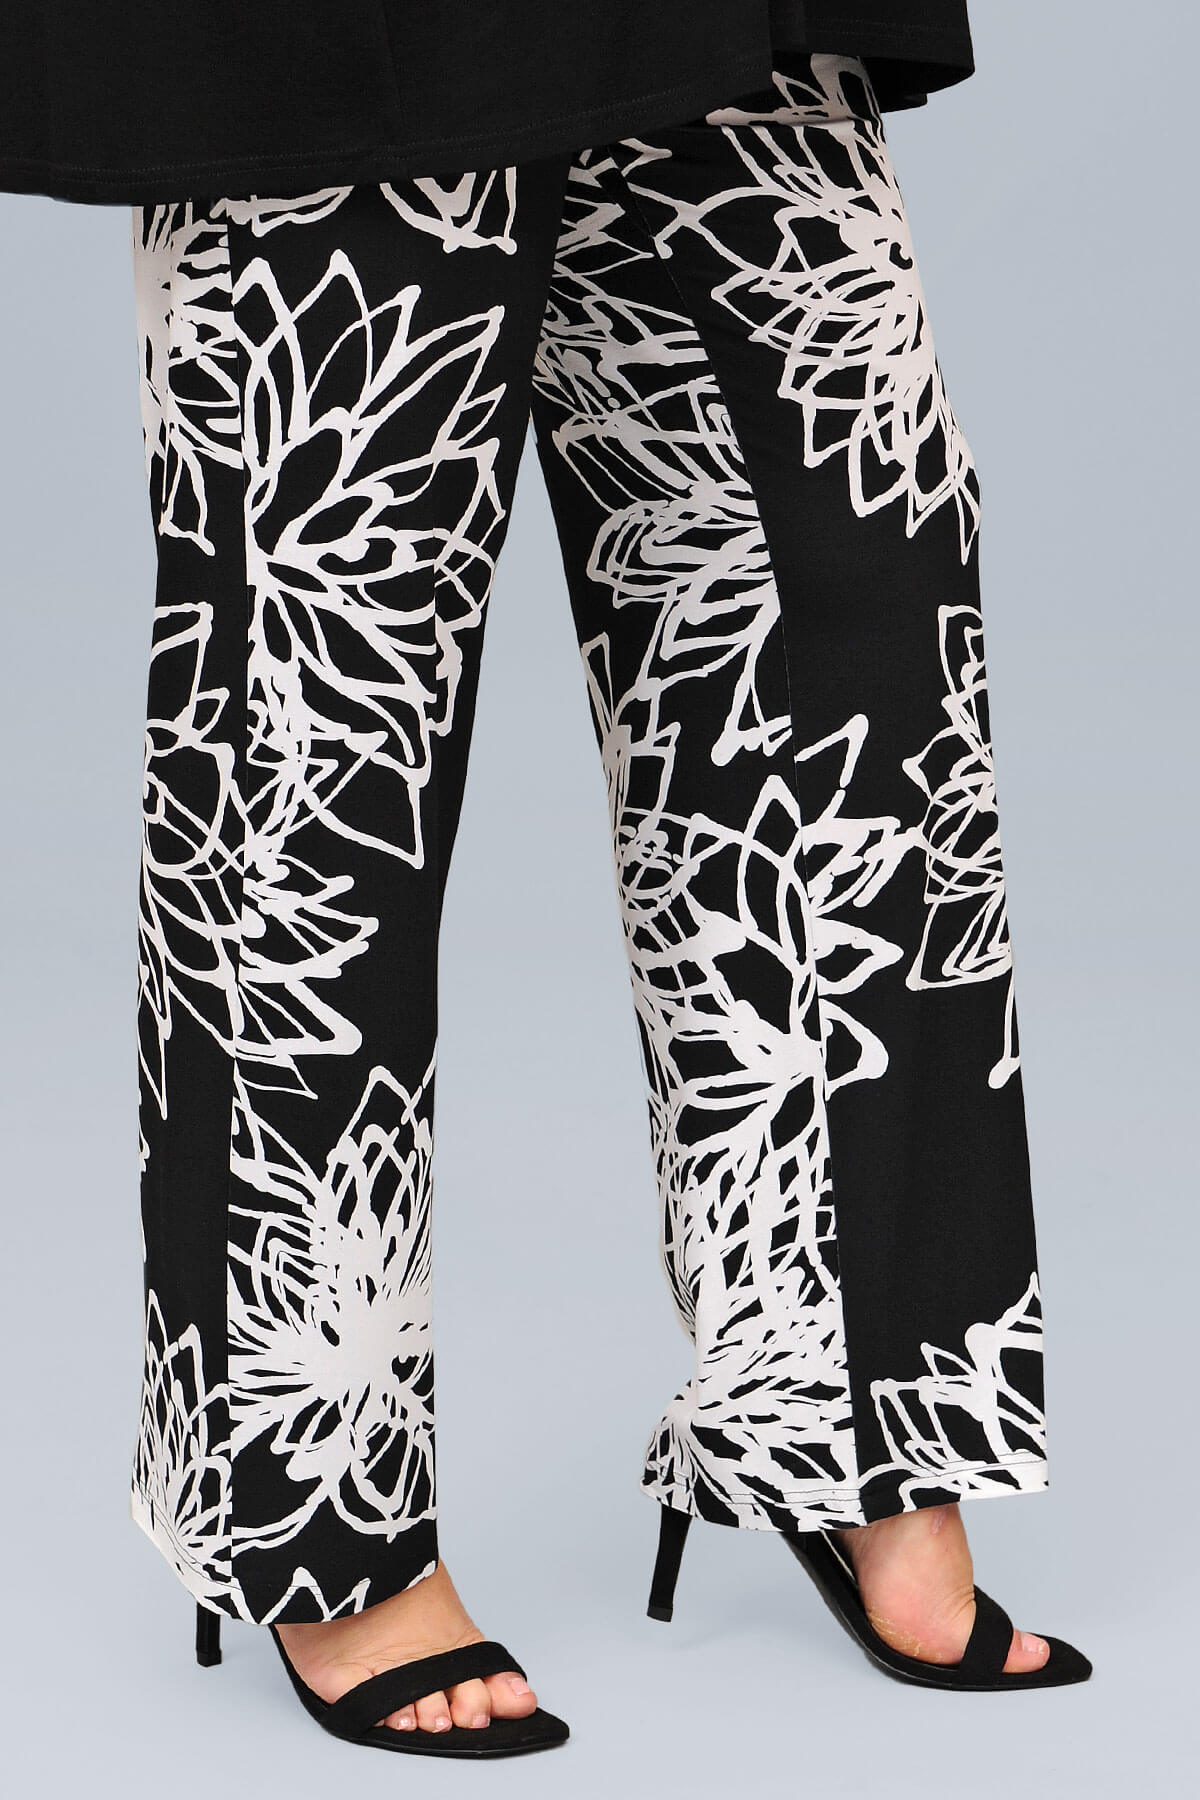 Doris Streich floral palazzo trousers